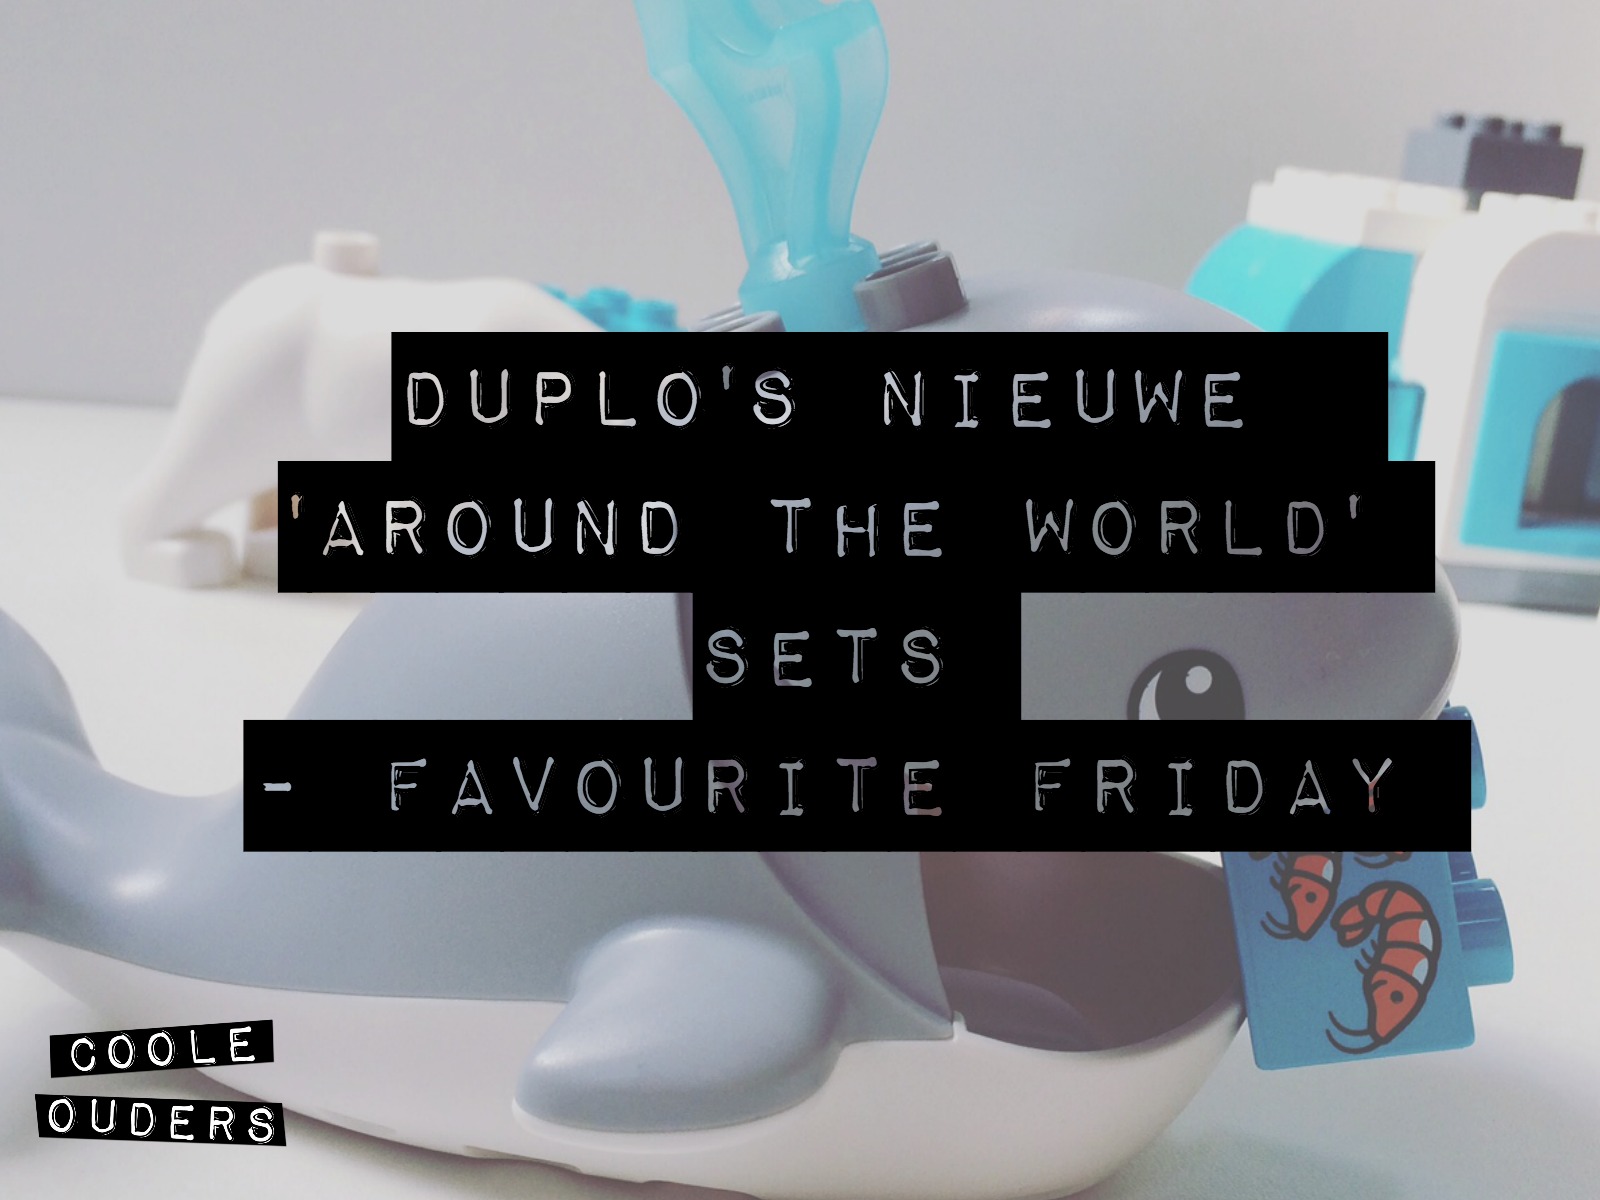 Duplo’s nieuwe ‘Around The World’ sets – Favourite Friday